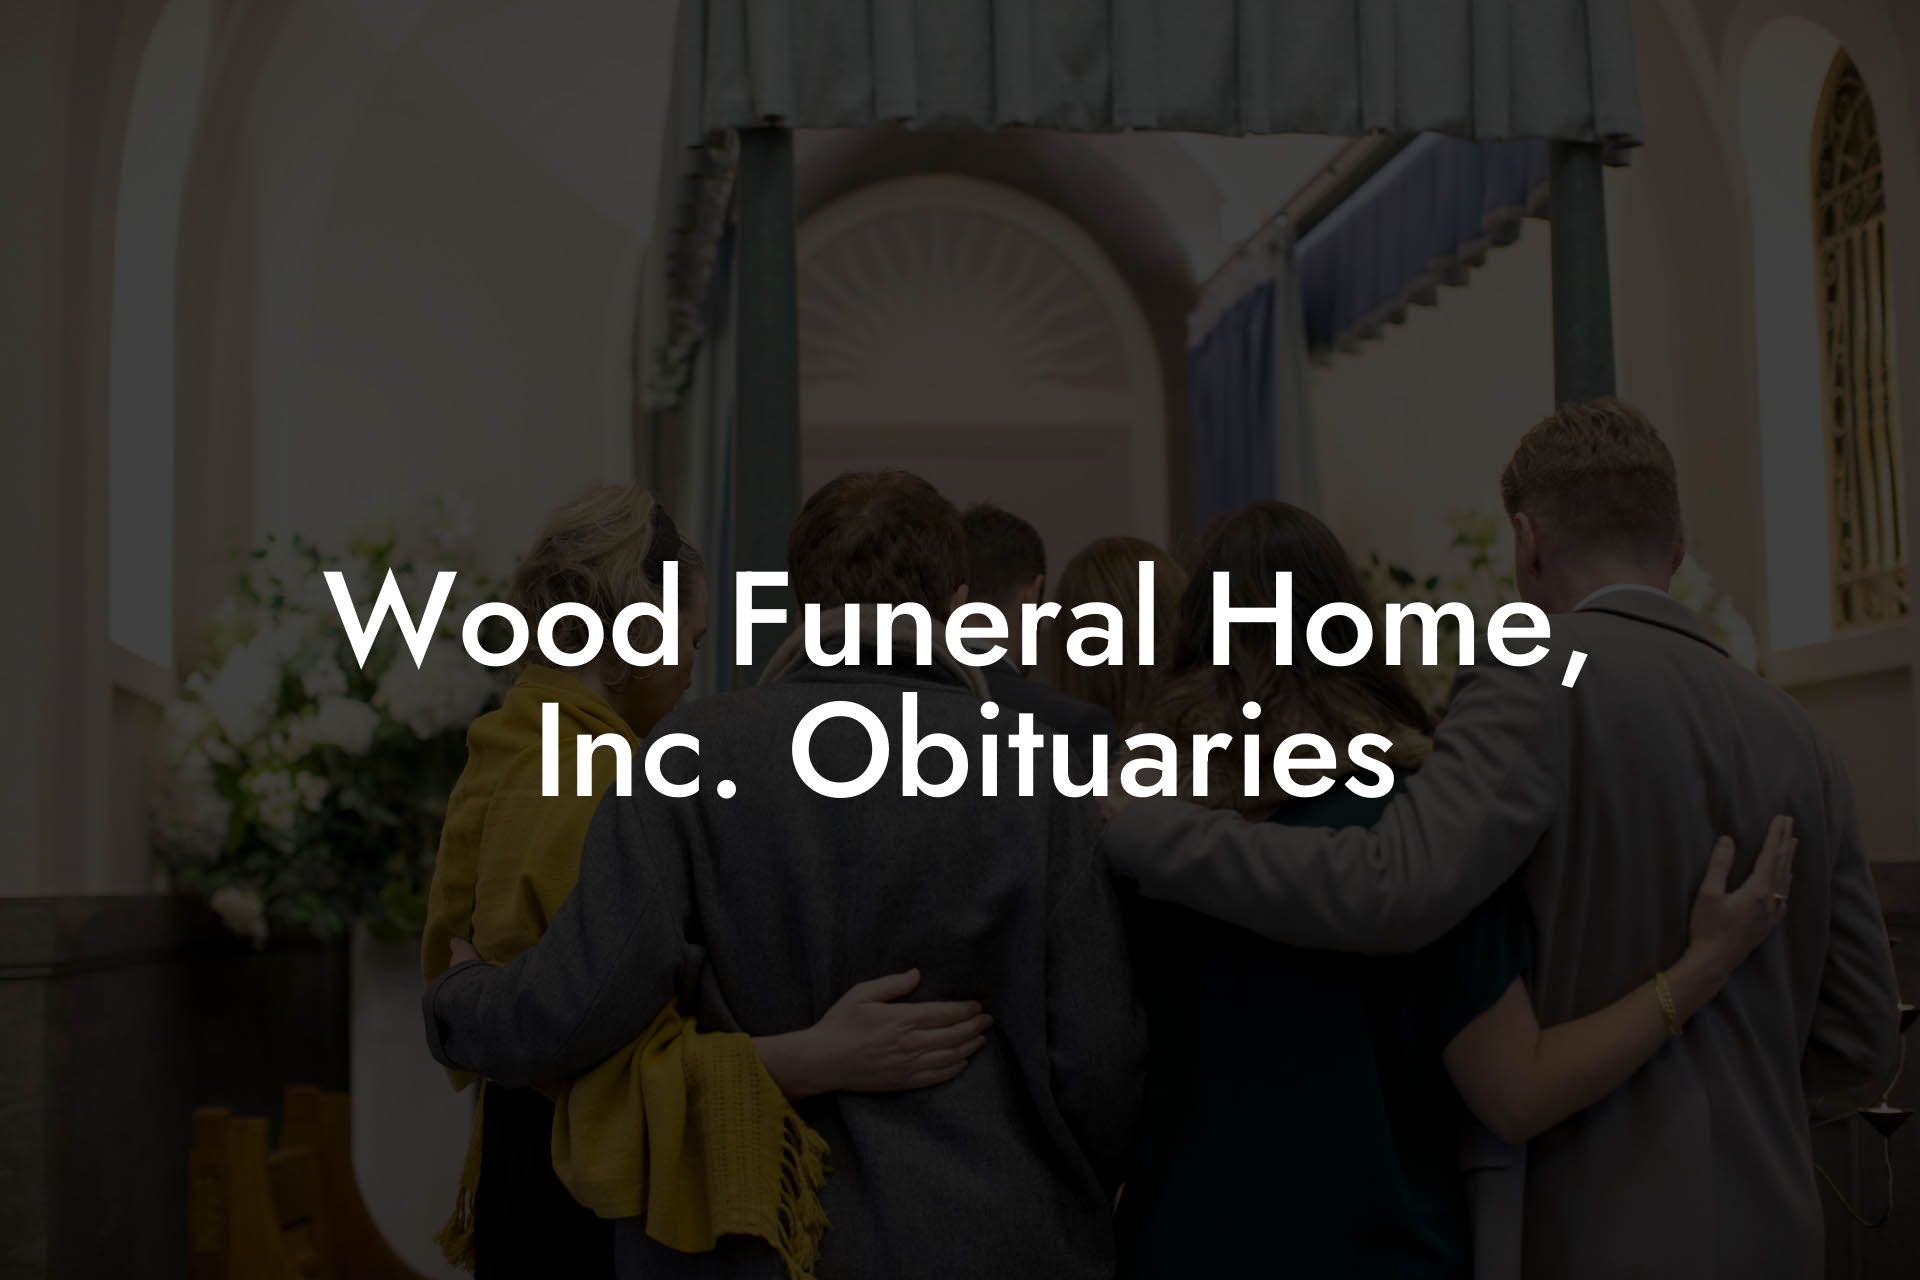 Wood Funeral Home, Inc. Obituaries